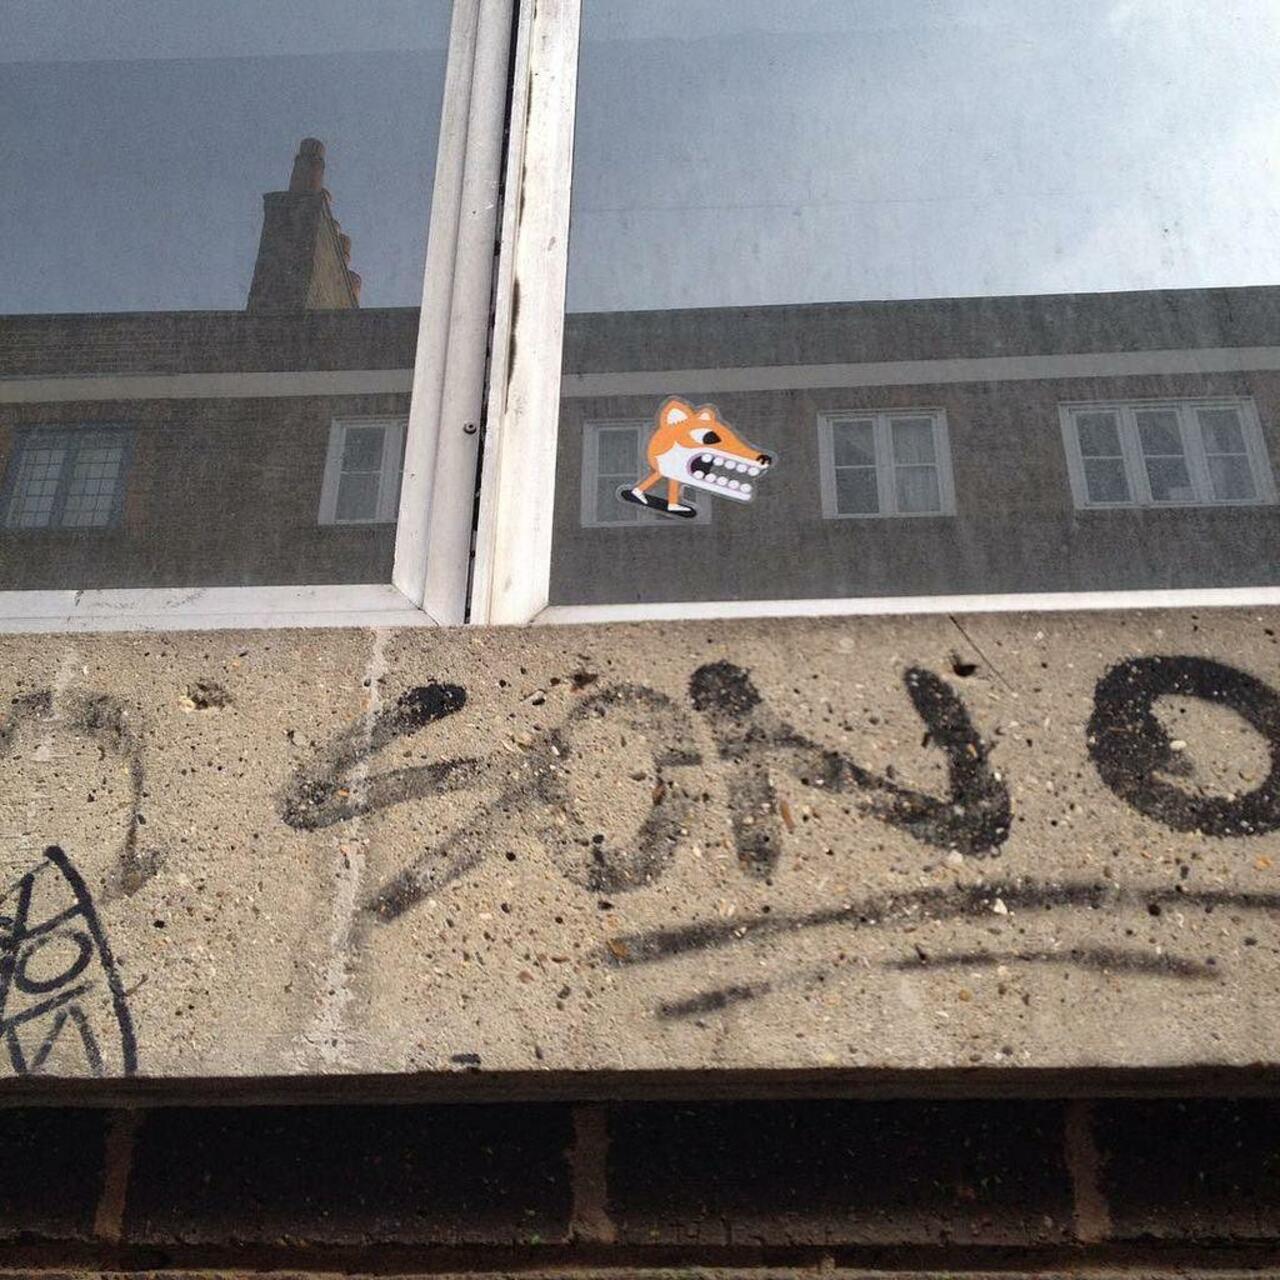 #streetart #graffiti #streetartlondon #london #thisislondon by isadarko http://t.co/MVl4cWhTv3